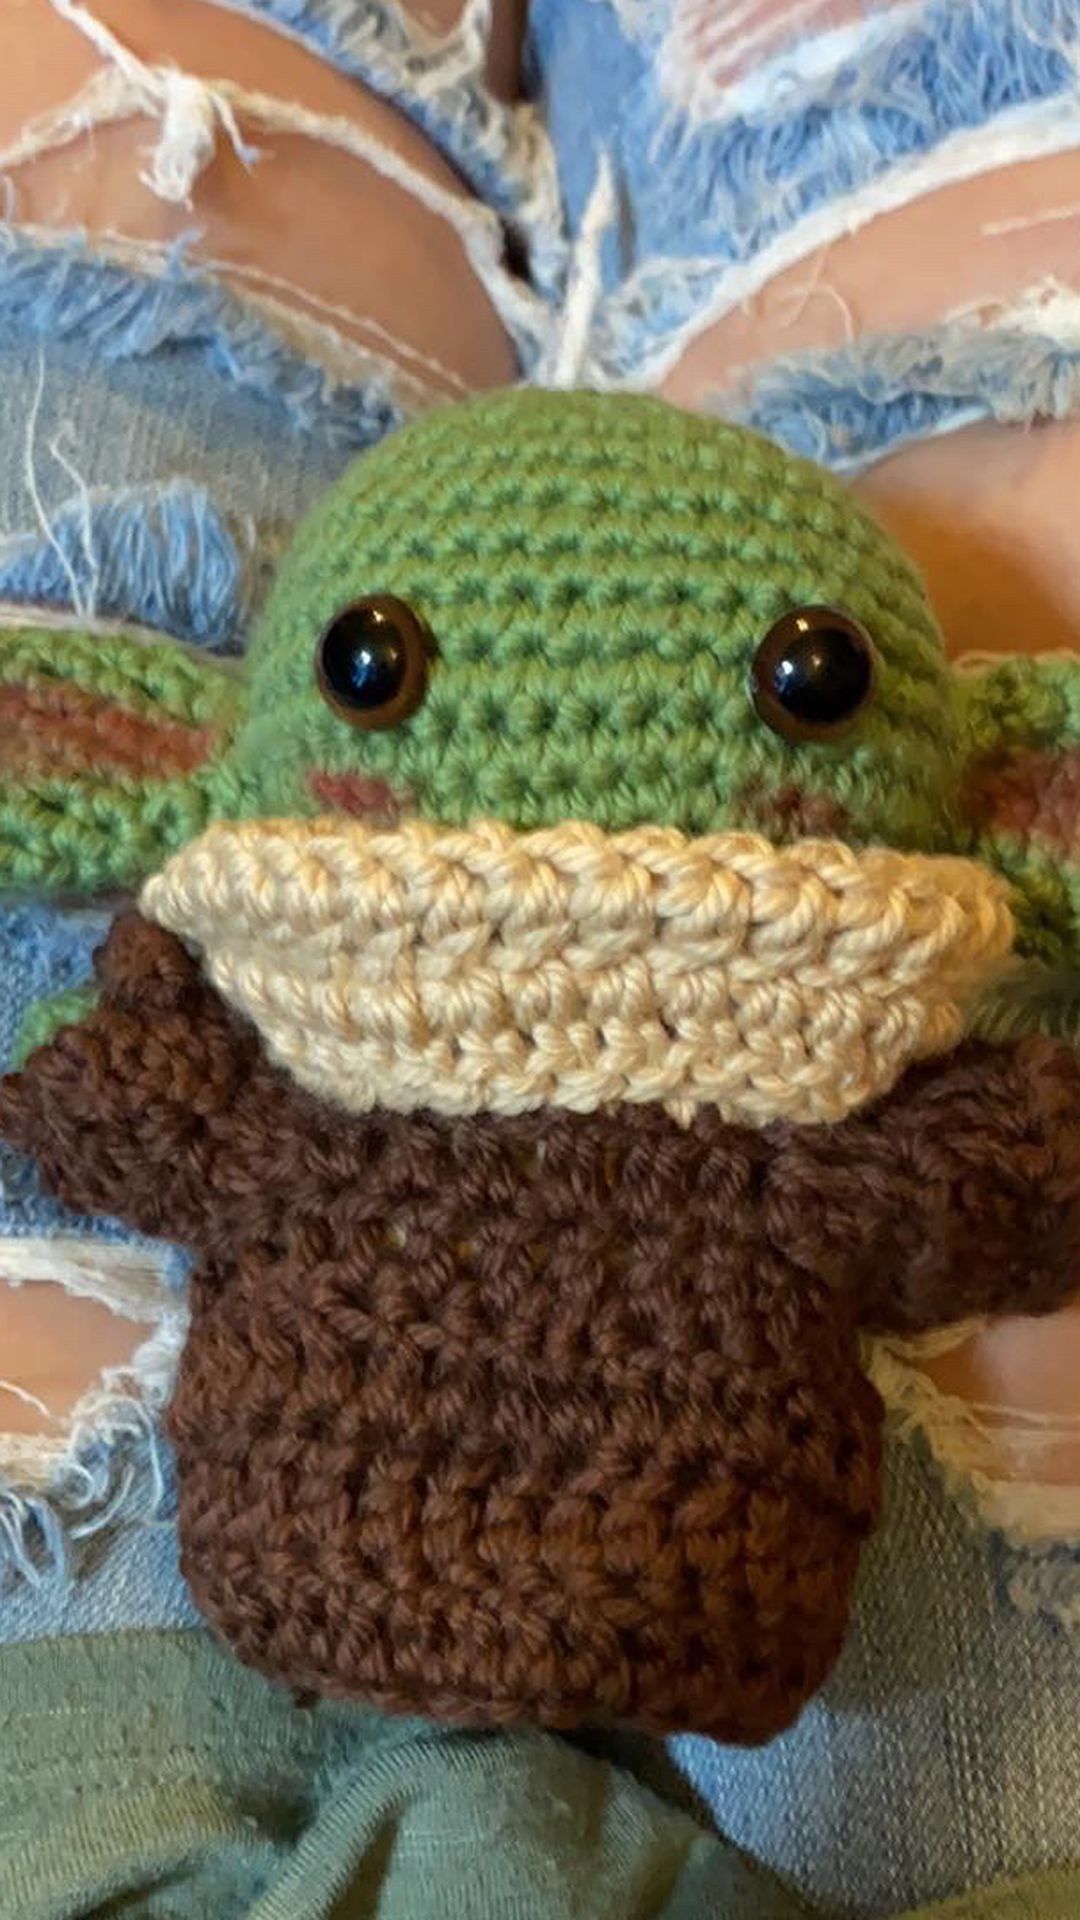 The Child 6”- Baby Yoda Mandalorian Plush Fan Art - Crochet Amigurumi.